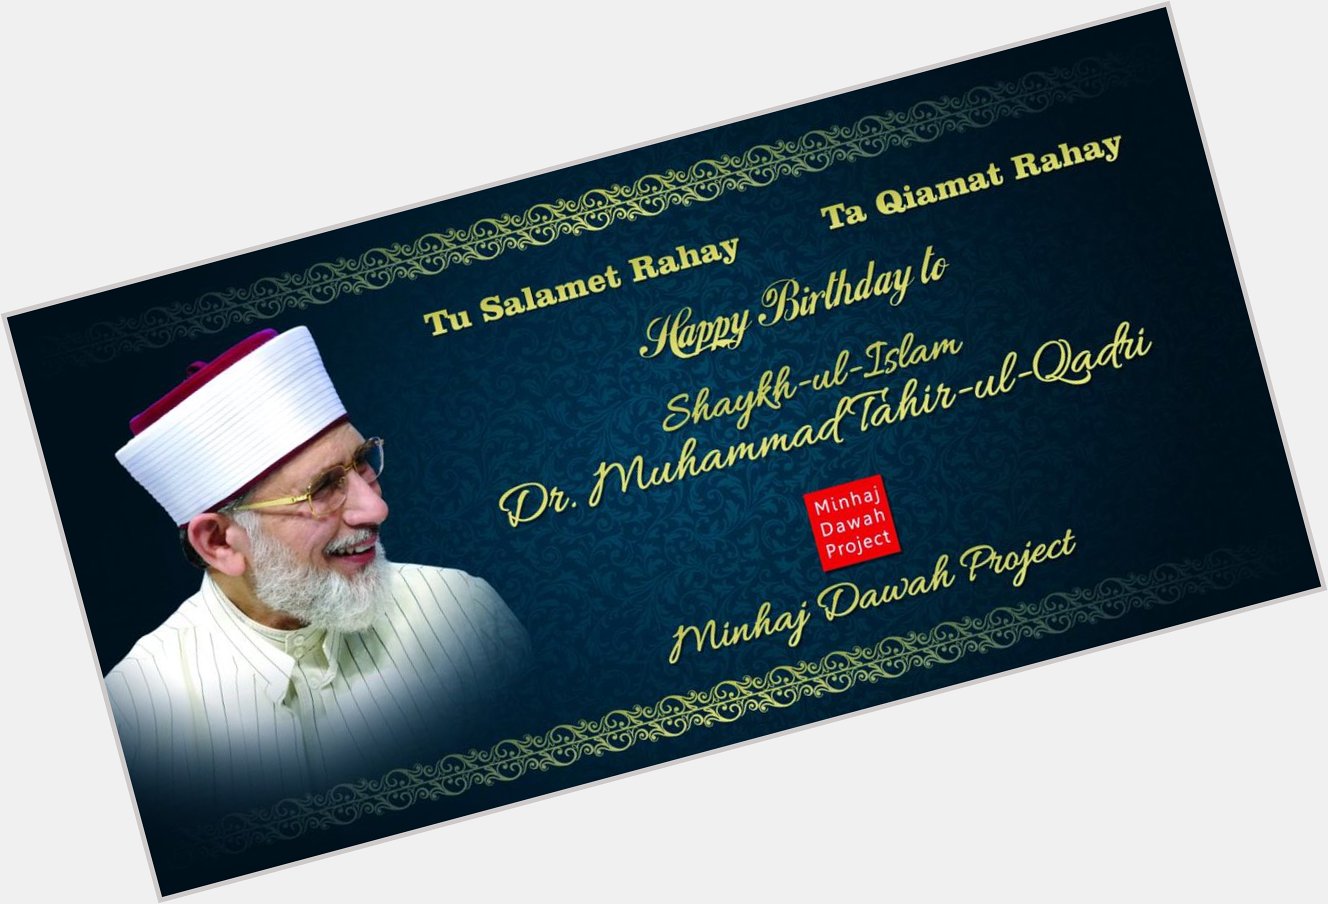 Wishing our beloved leader Dr Muhammad Tahir-ul-Qadri a very happy birthday. 